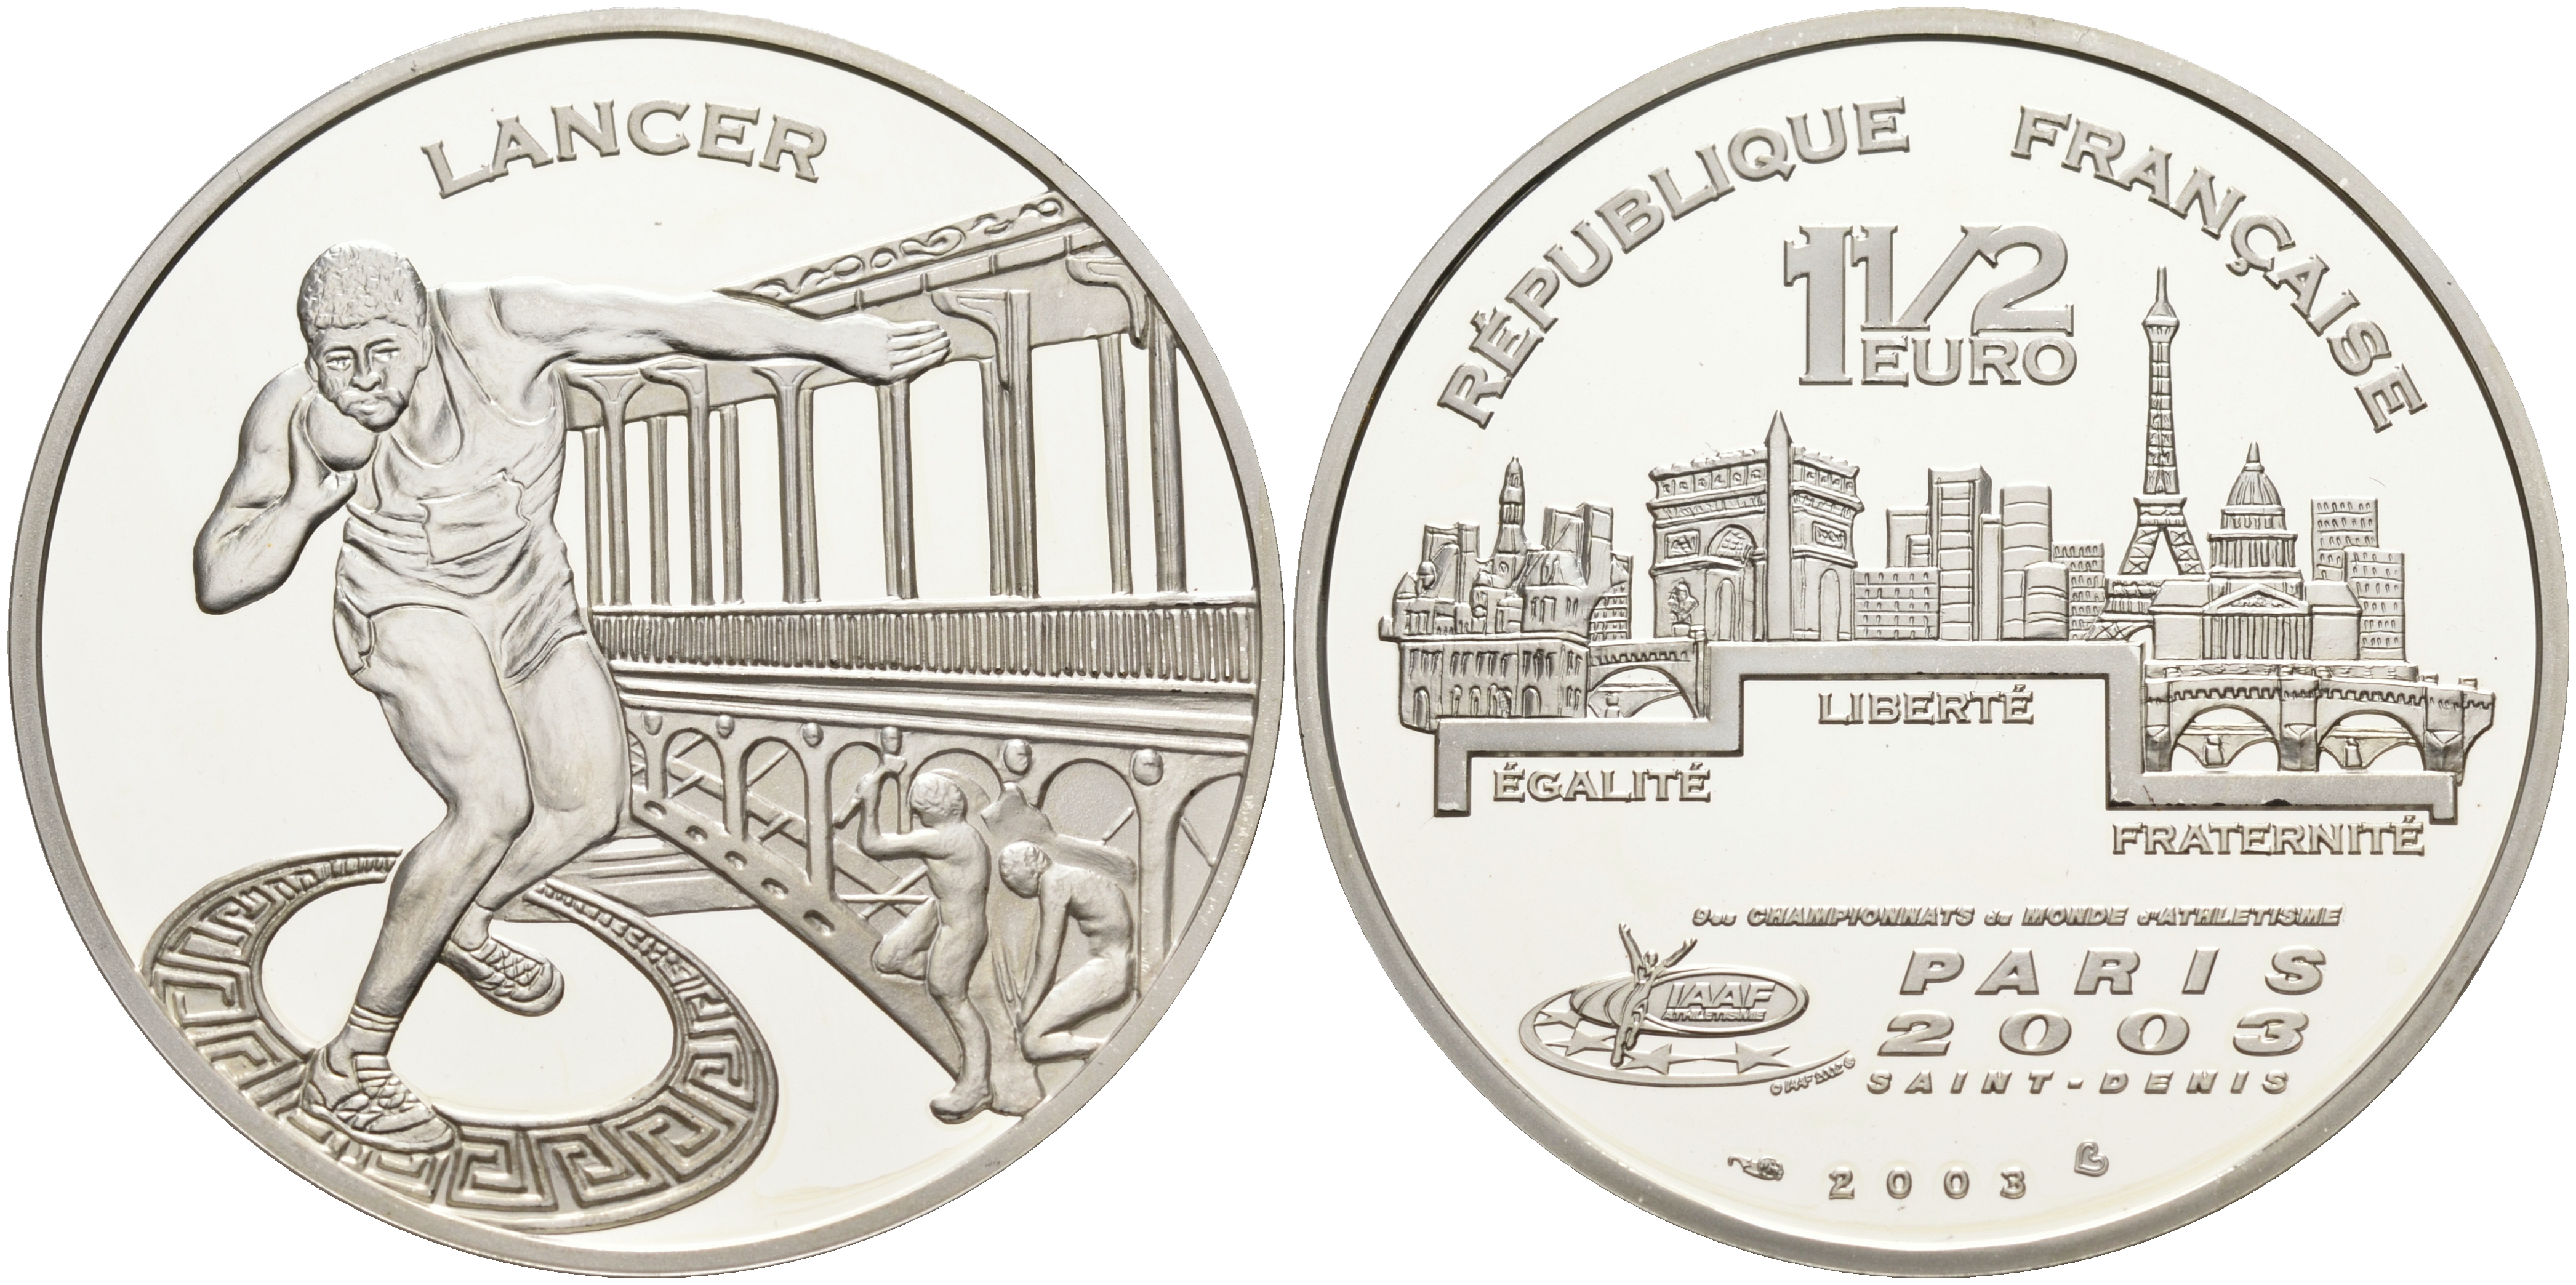 Fr 1.5. Monnaie de Paris монета 2005 1 1/2. Франция 1 1/2 евро 2003. 1,5 Евро Франция серебро. 1,5 Евро Франция серебро 2003 год купить в Москве.